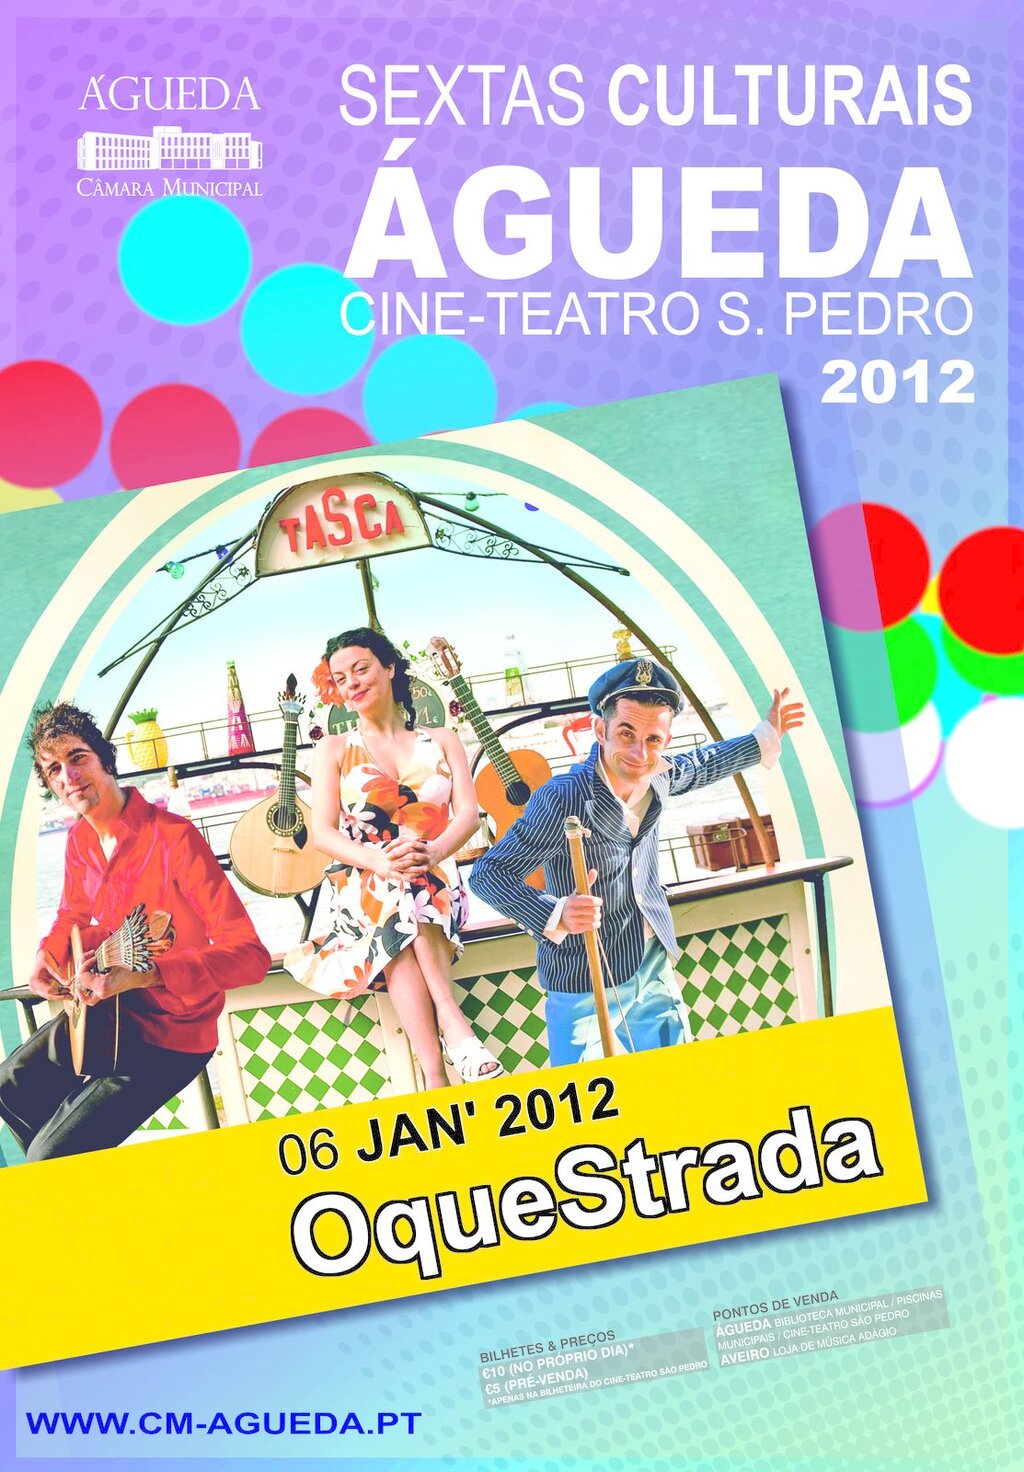 Sextas Culturais 2012 :: OQUESTRADA 